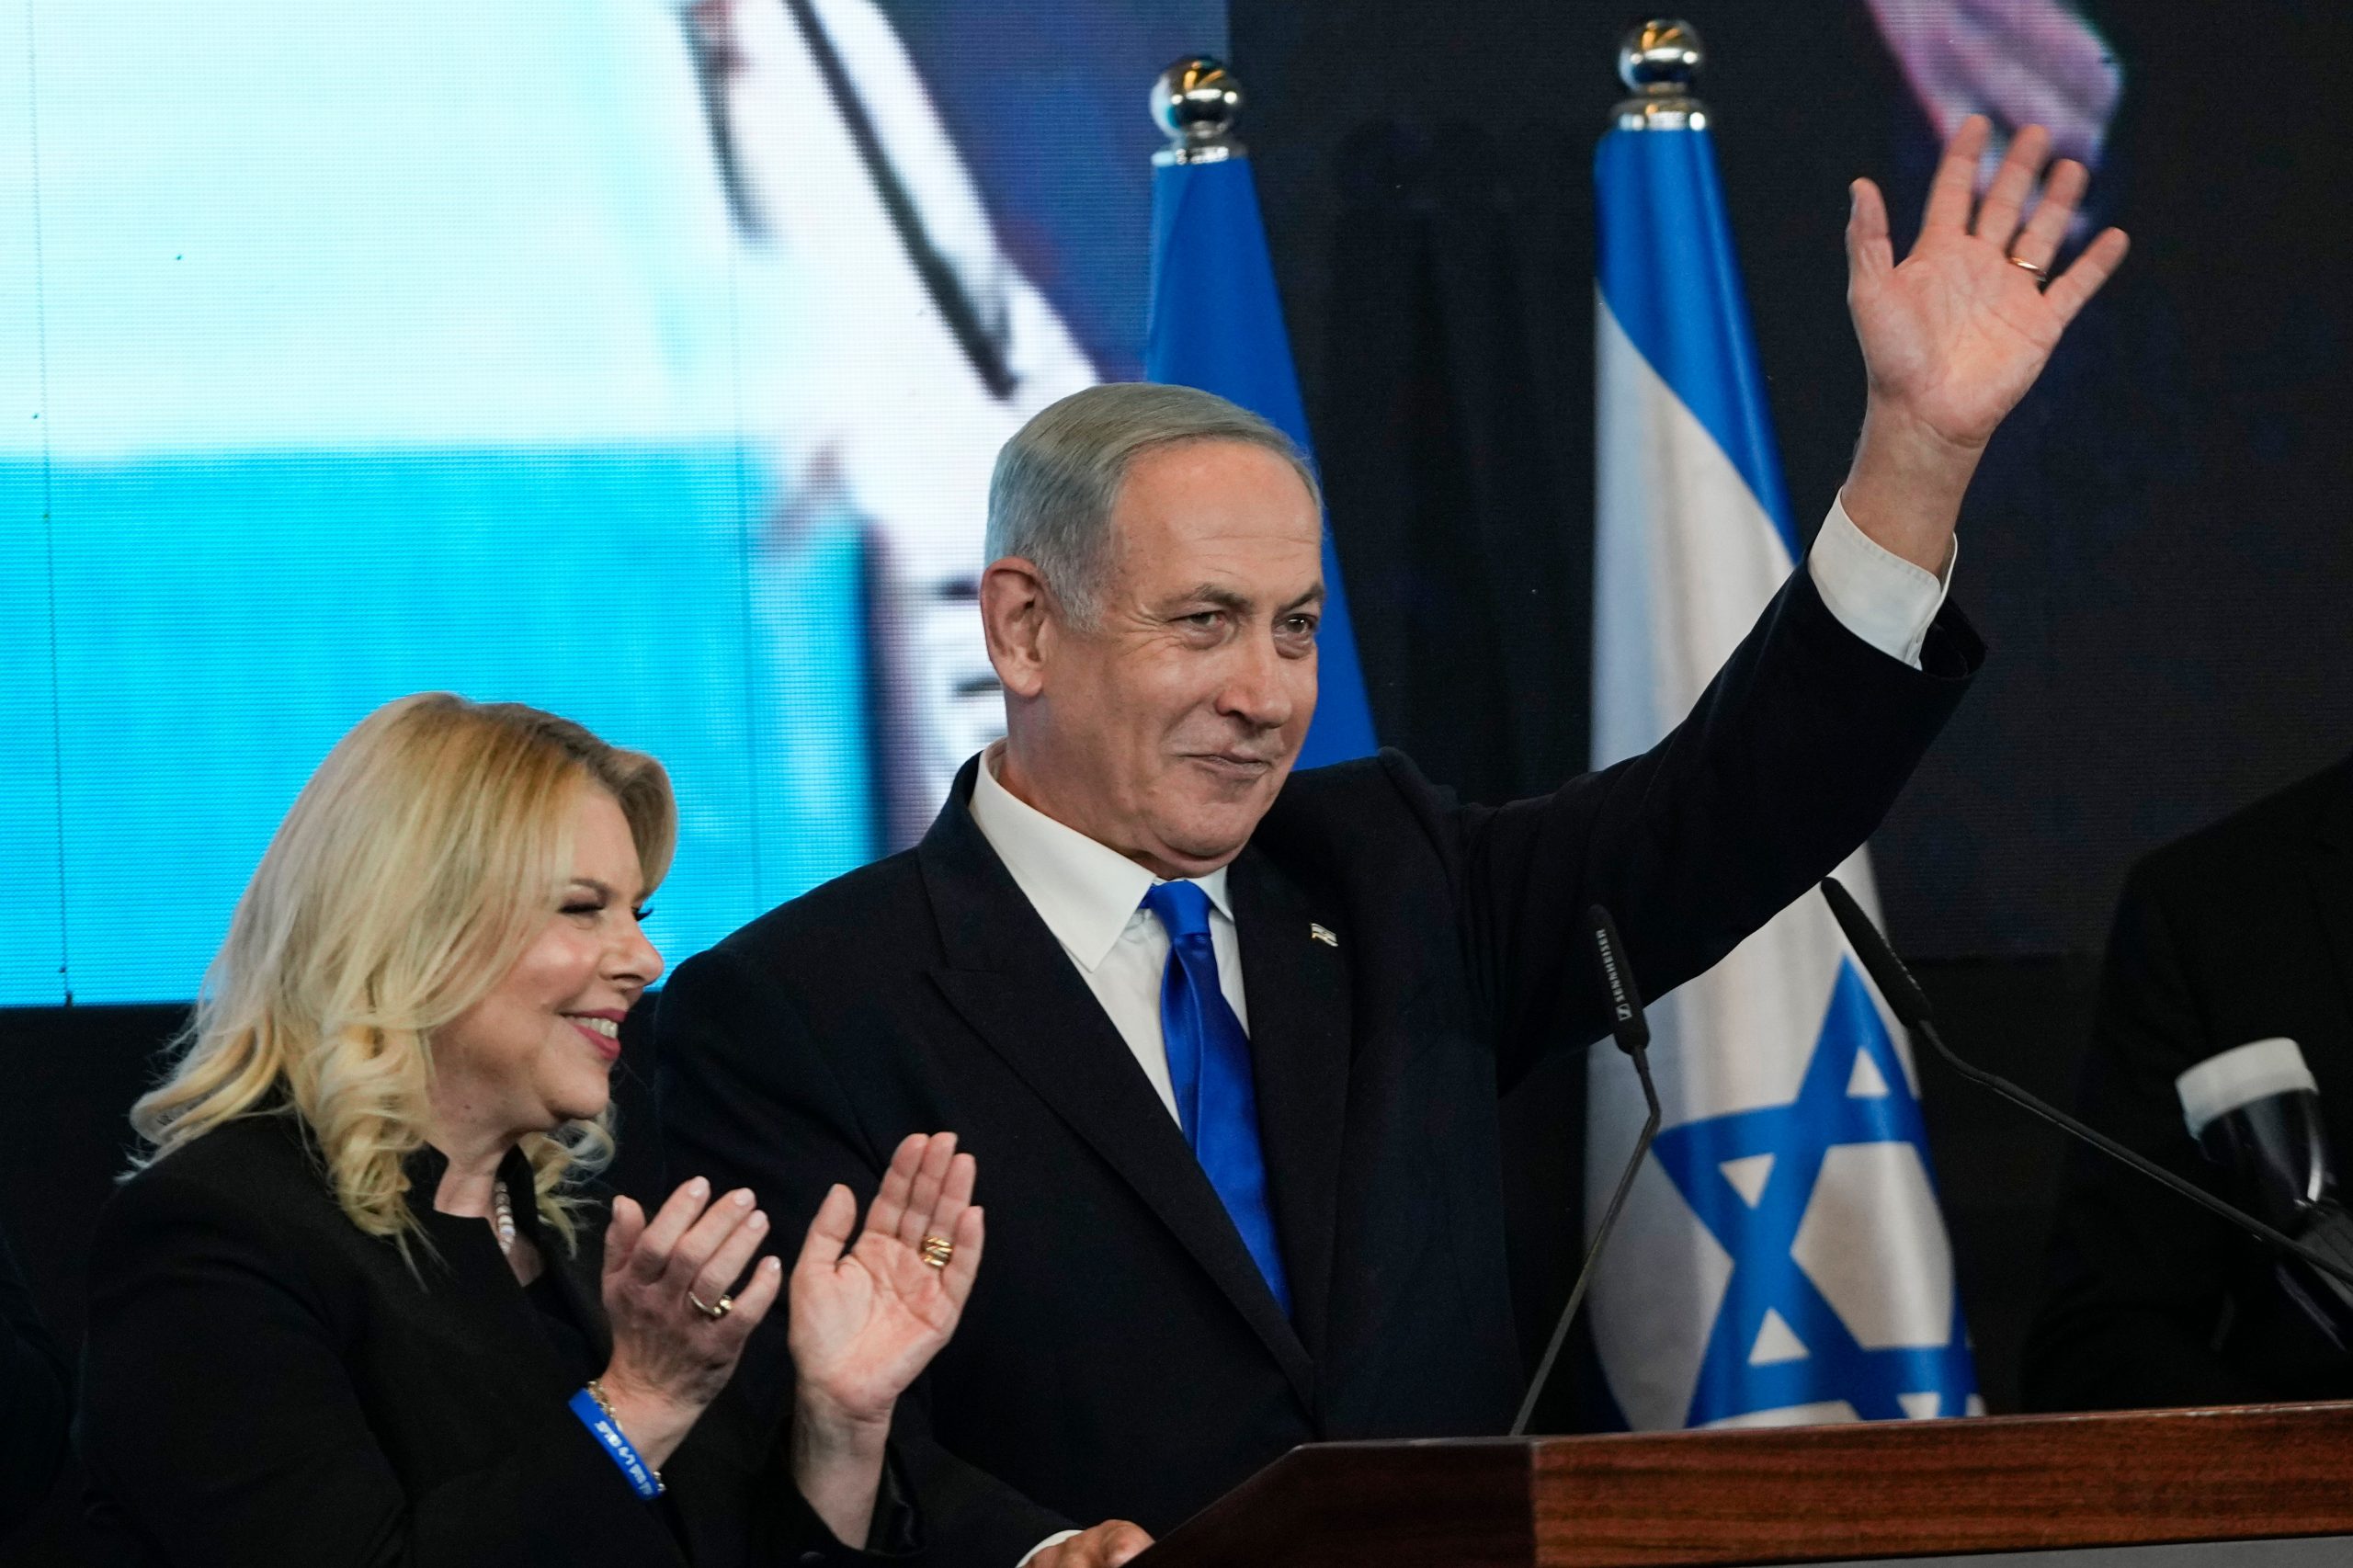 Benjamin Netanyahu becomes Israel Prime Minister again, Yair Lapid concedes defeat